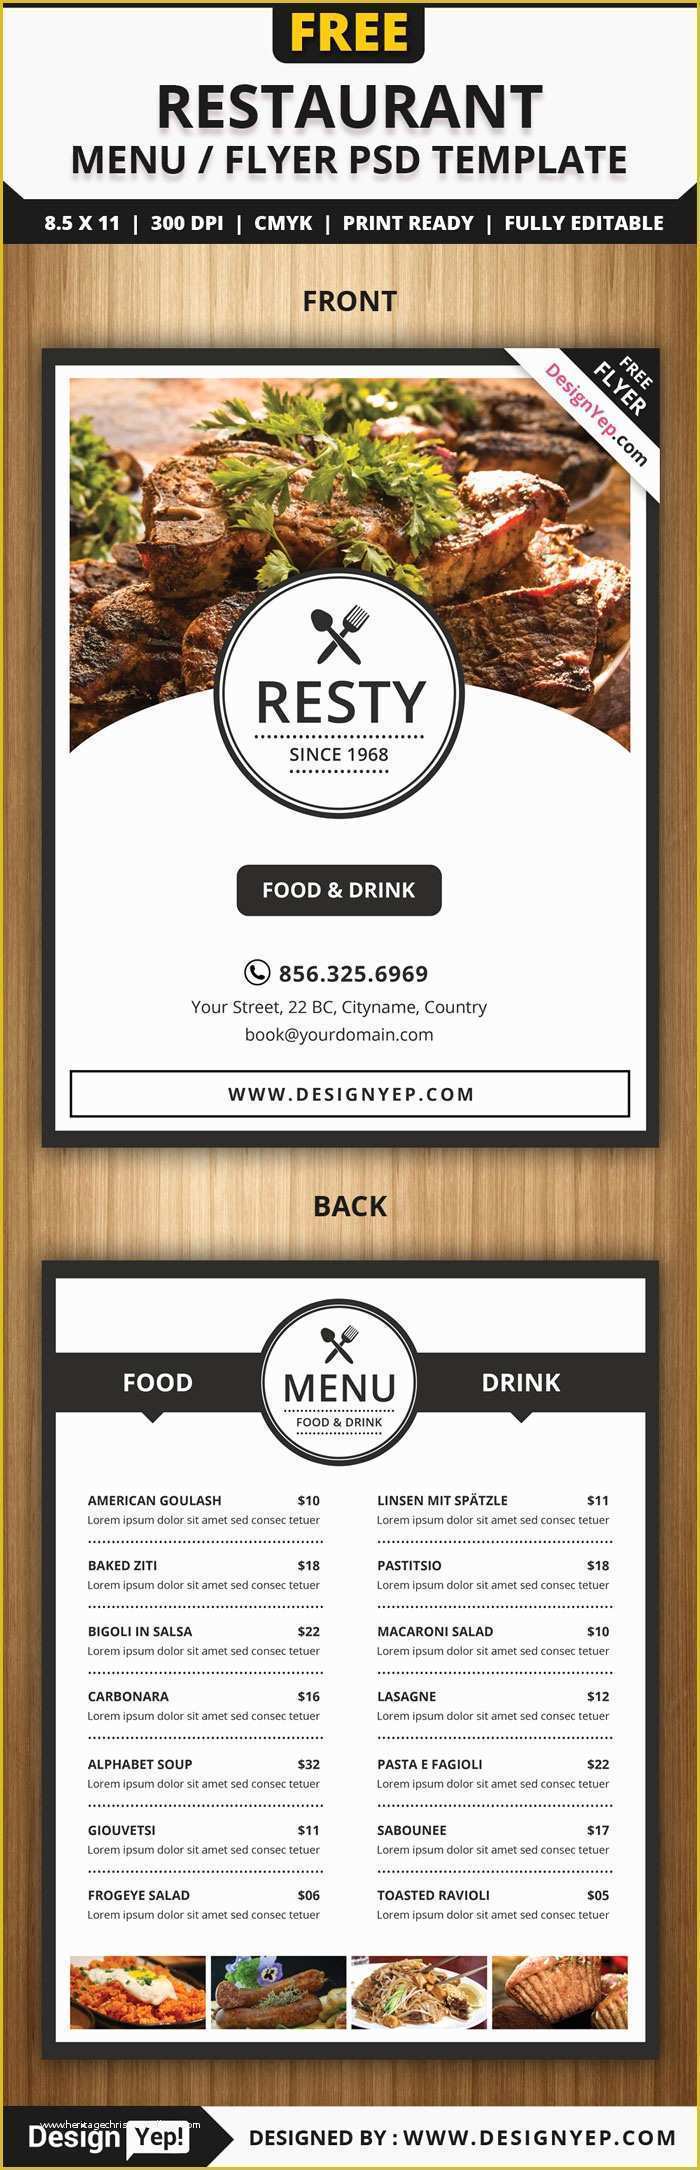 Free Menu Template Google Docs Of 30 Free Restaurant and Food Menu Flyer Templates Designyep